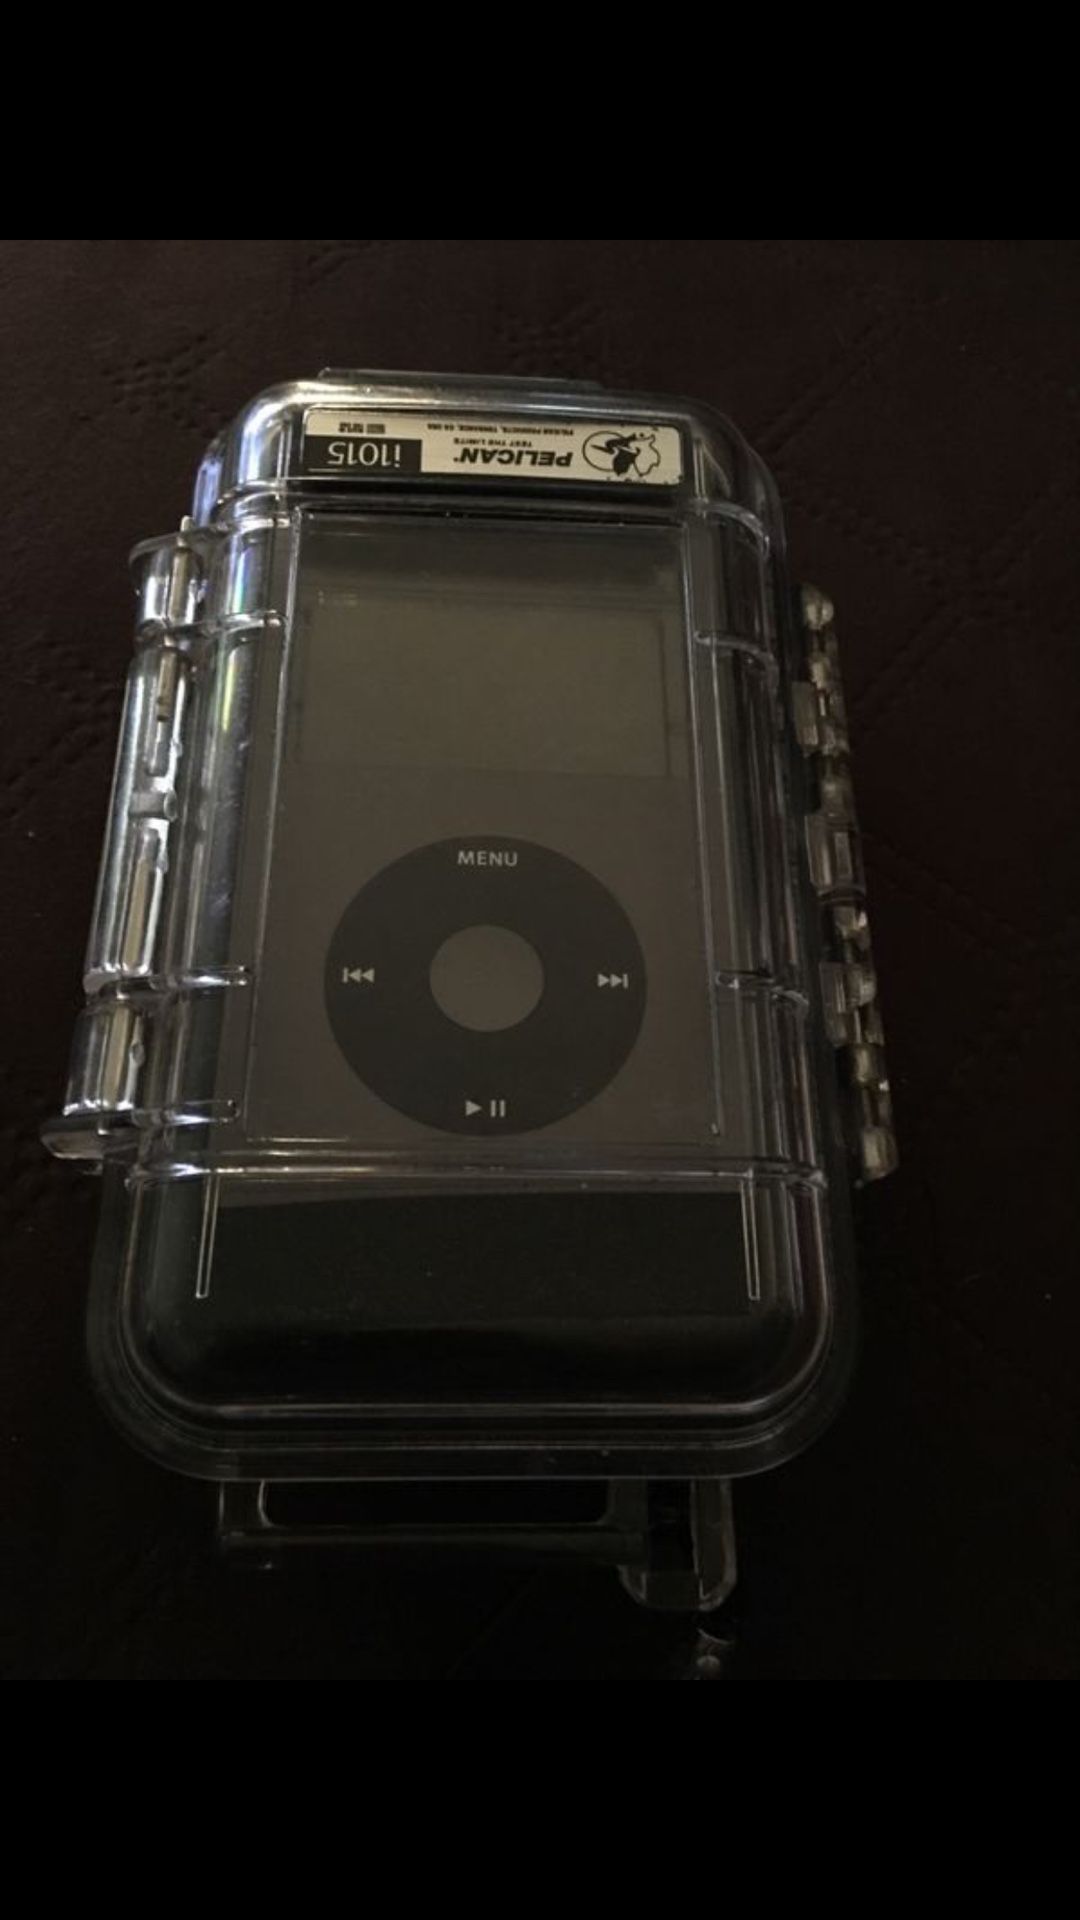 Apple iPod 160g